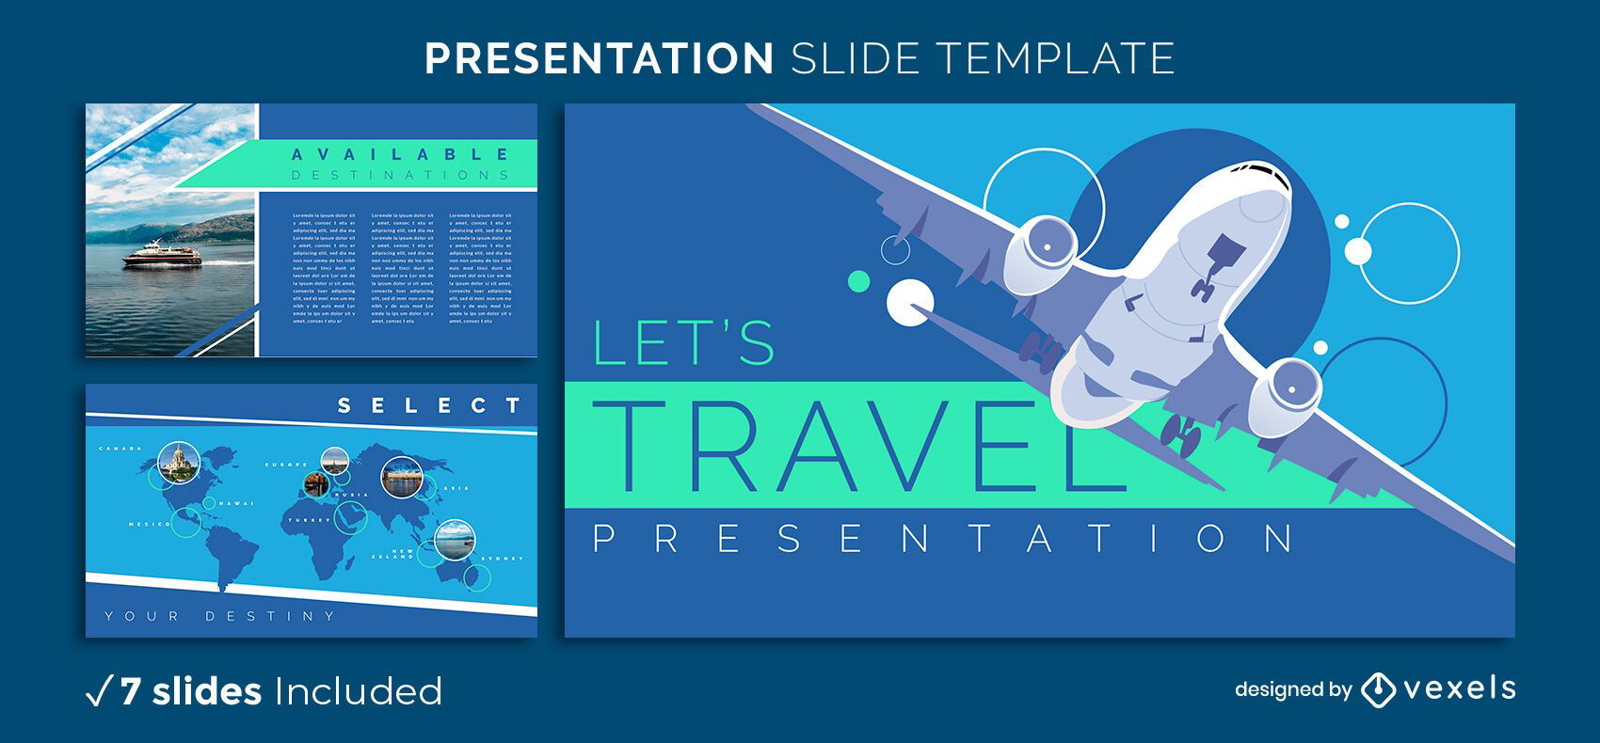 travel presentation titles